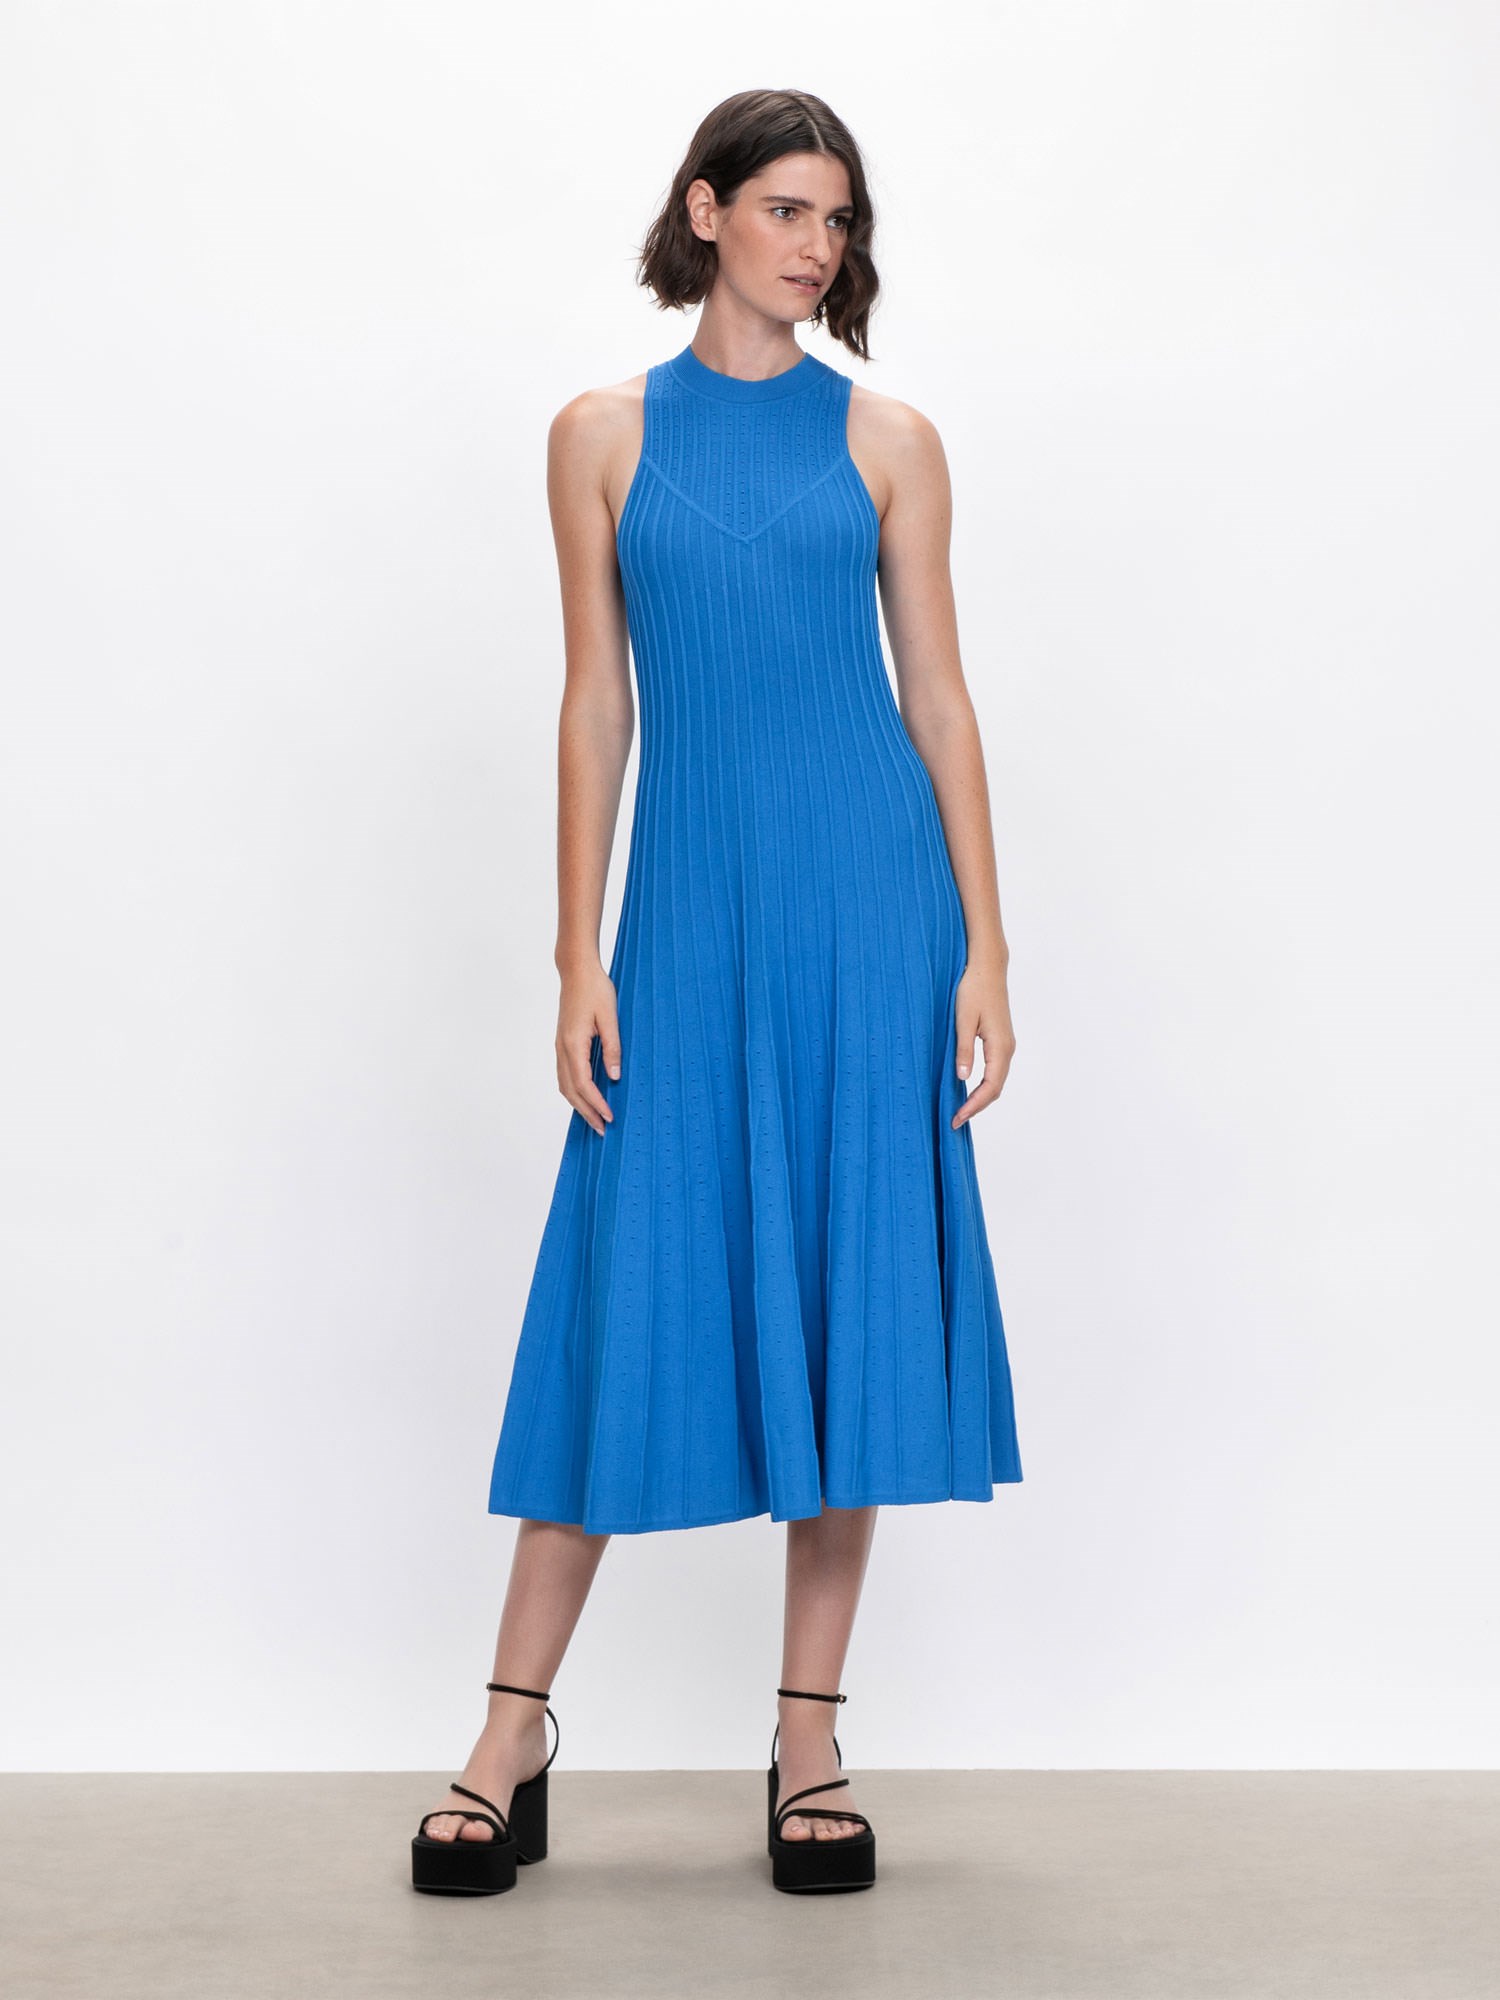 Pleat and Pointelle Knit Dress | Buy Knitwear Online - Veronika Maine